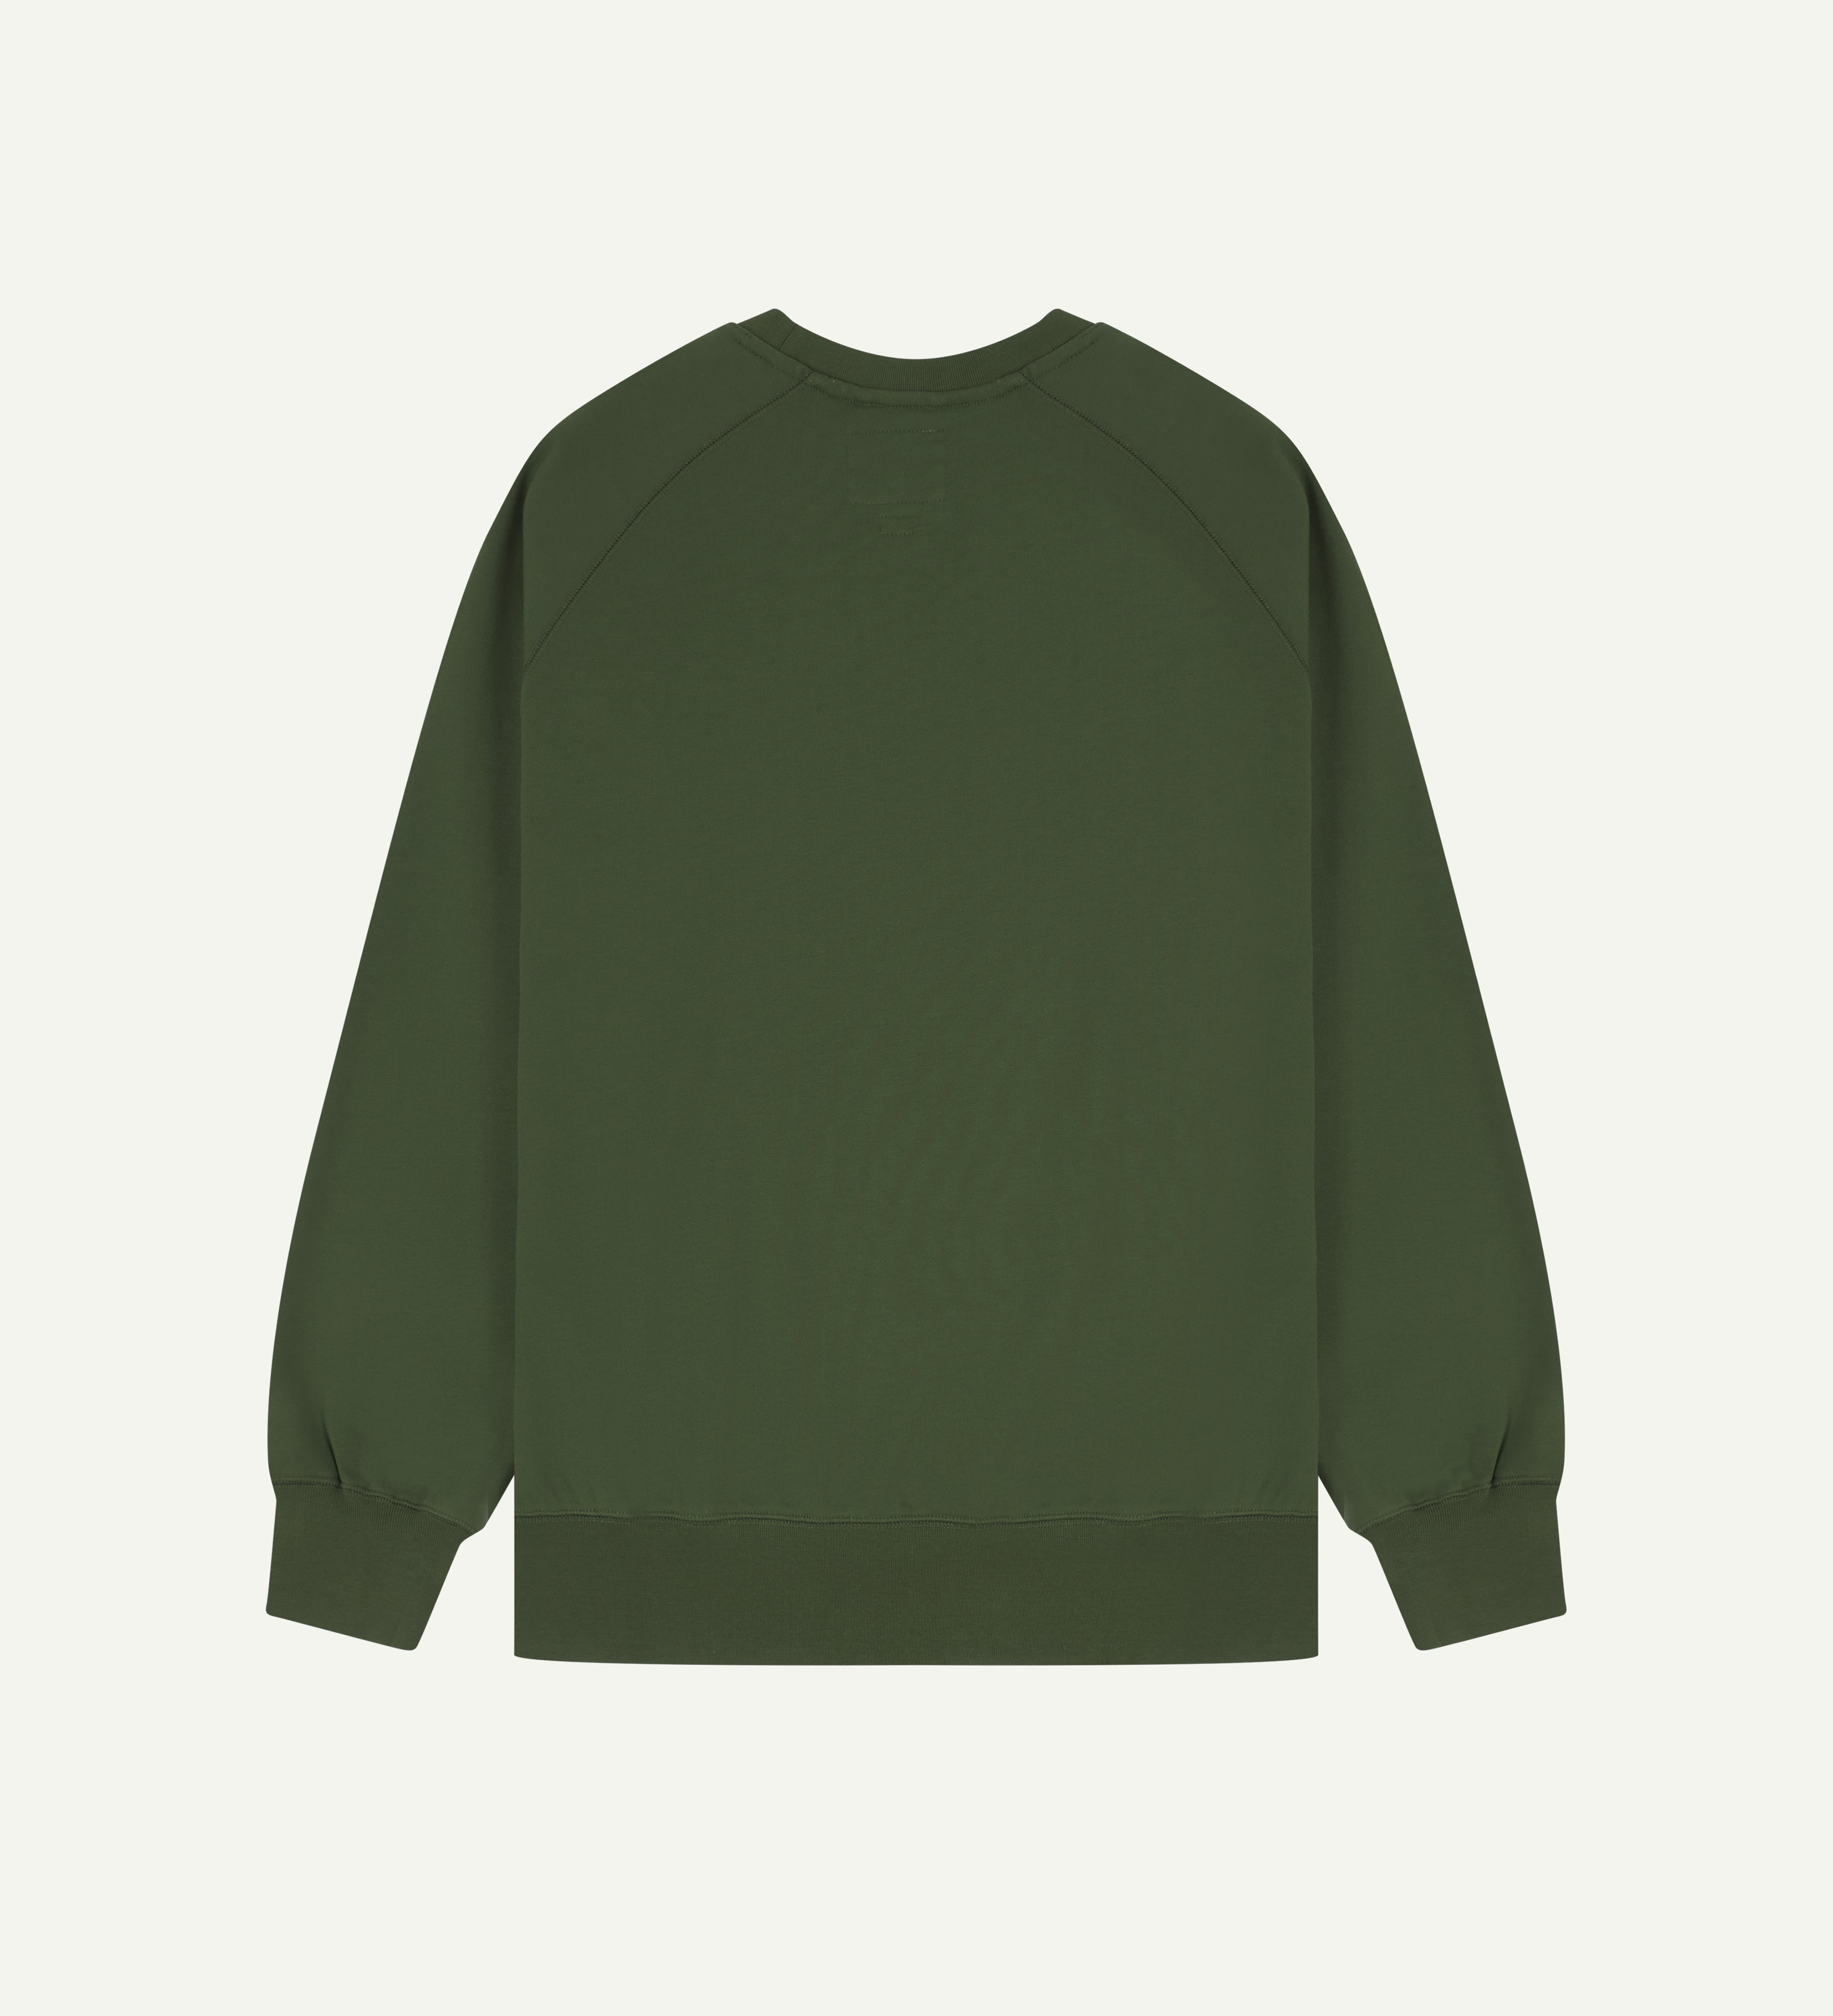 Uskees sweatshirts | 100% organic cotton sweatshirts